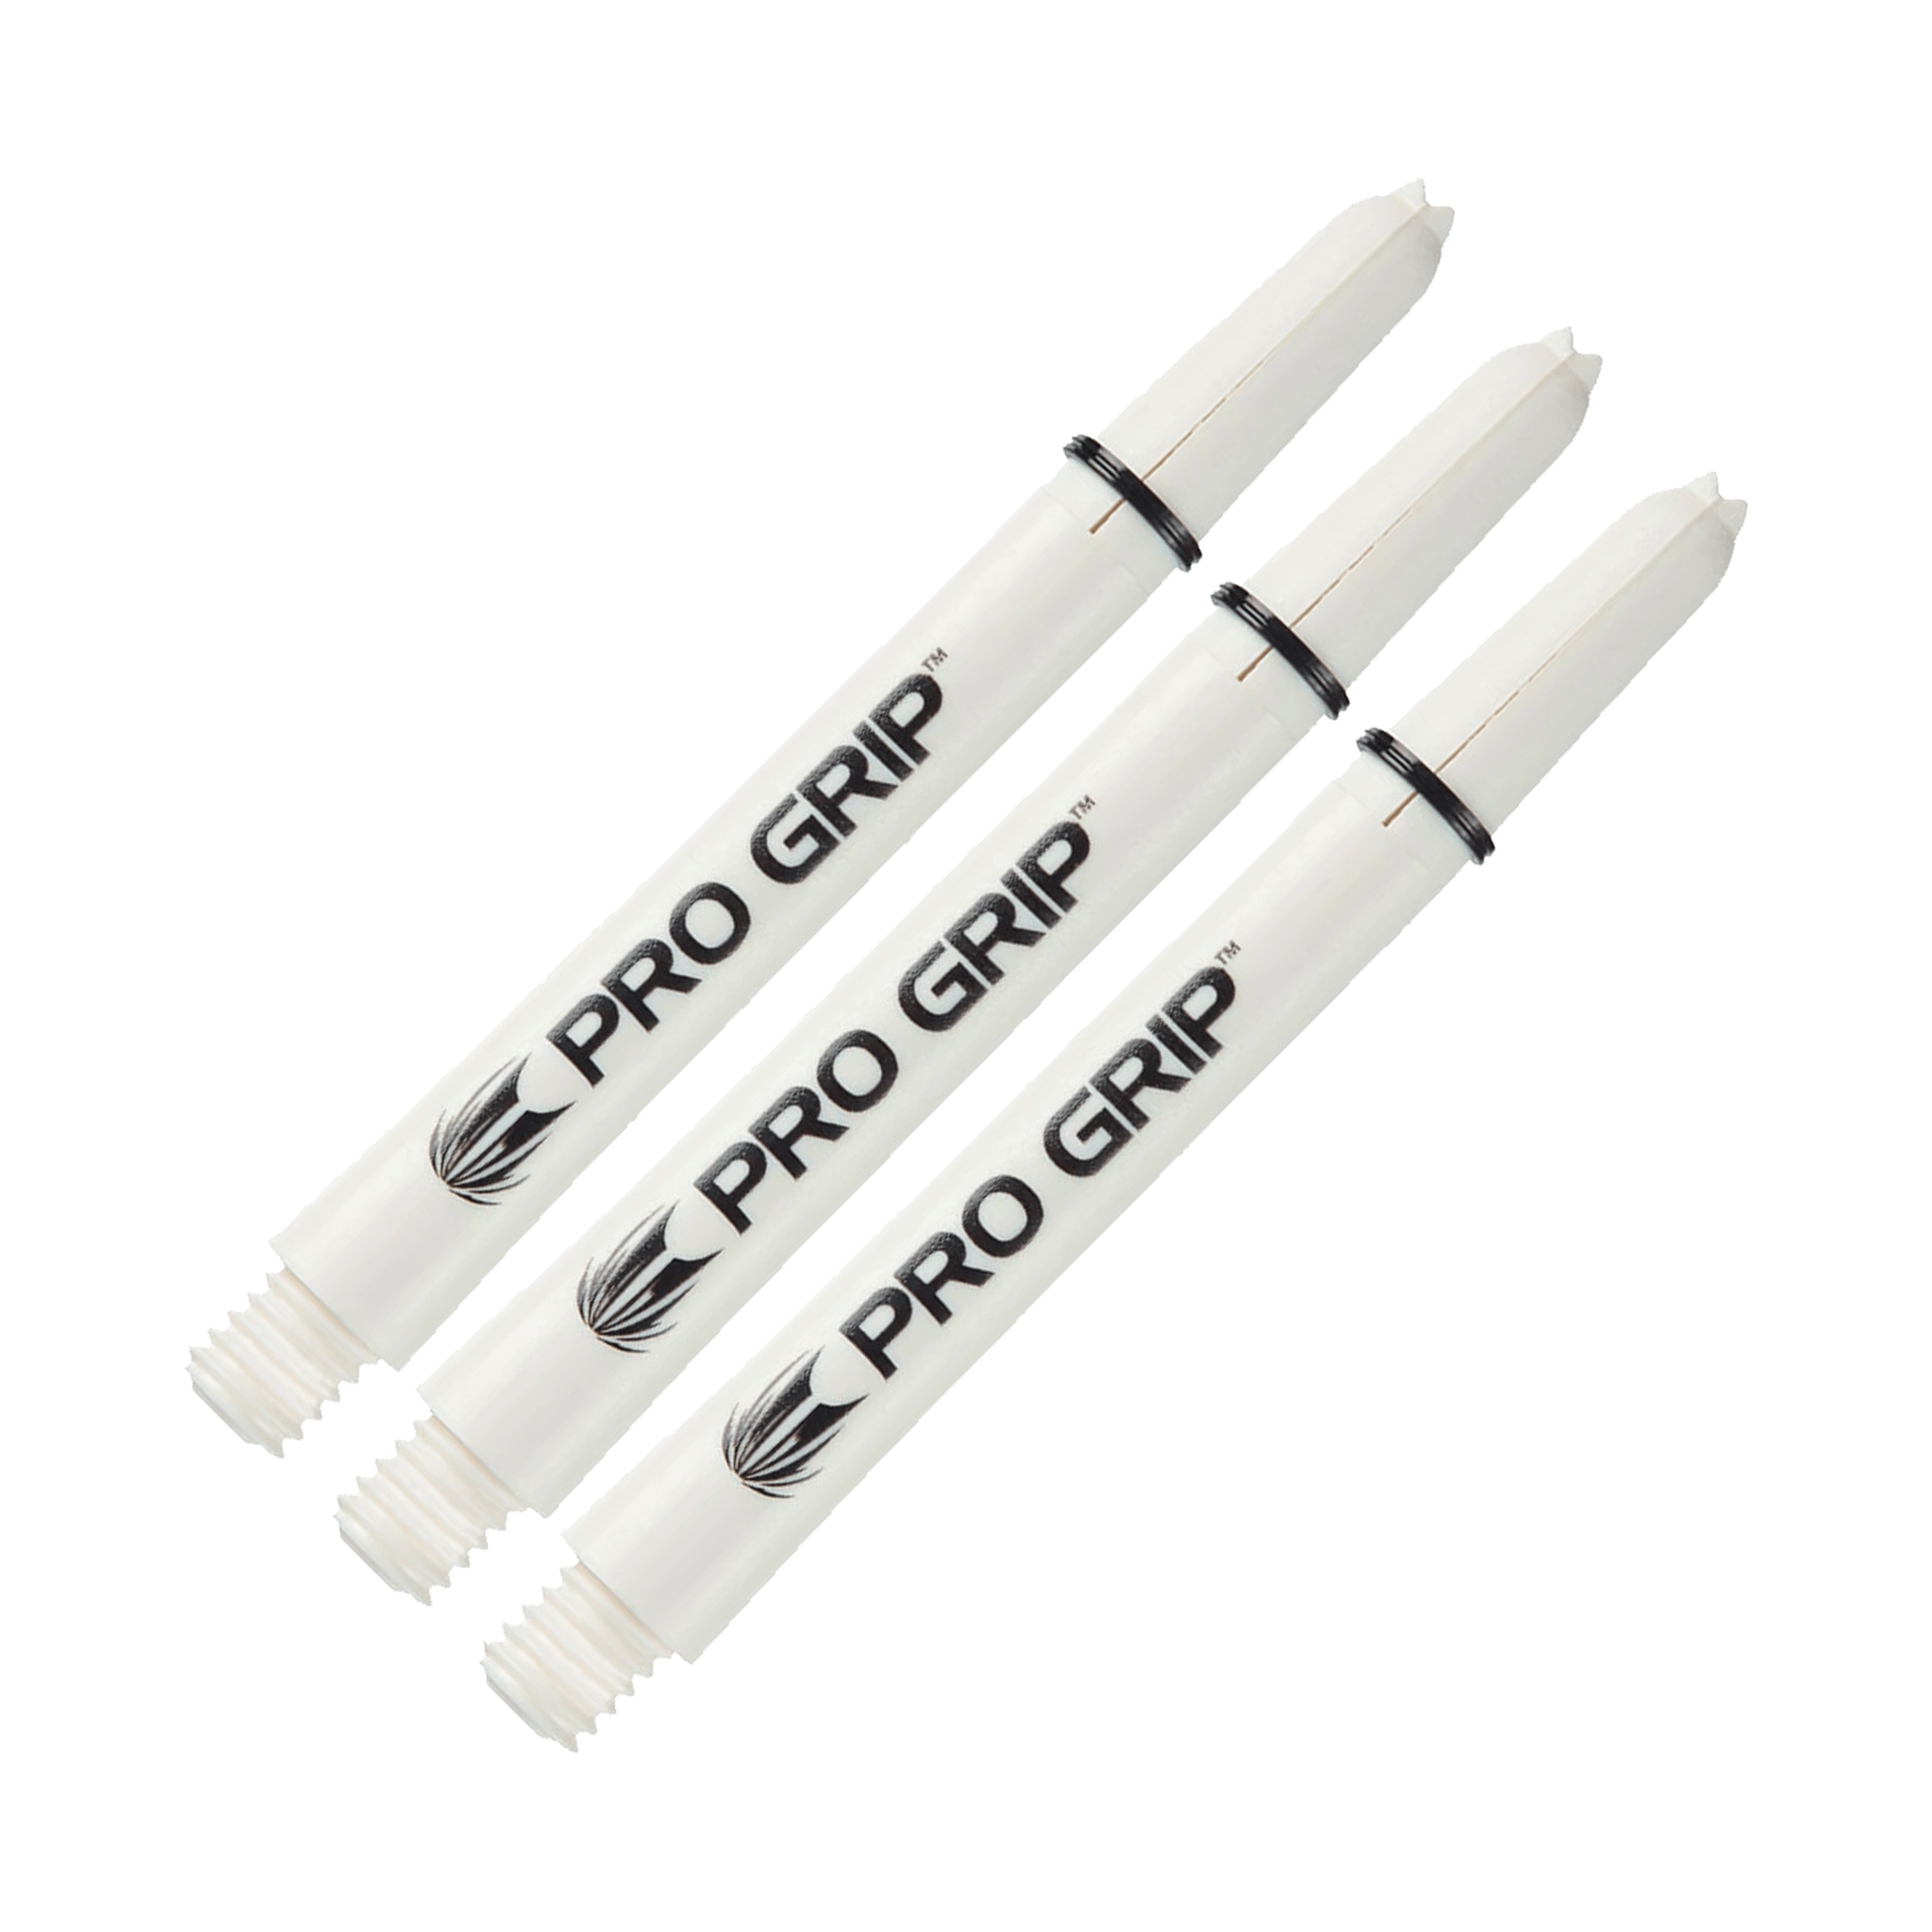 Target Pro Grip Multi Pack - Nylon Dart Shafts (3 Sets) White / Medium (48mm) Shafts